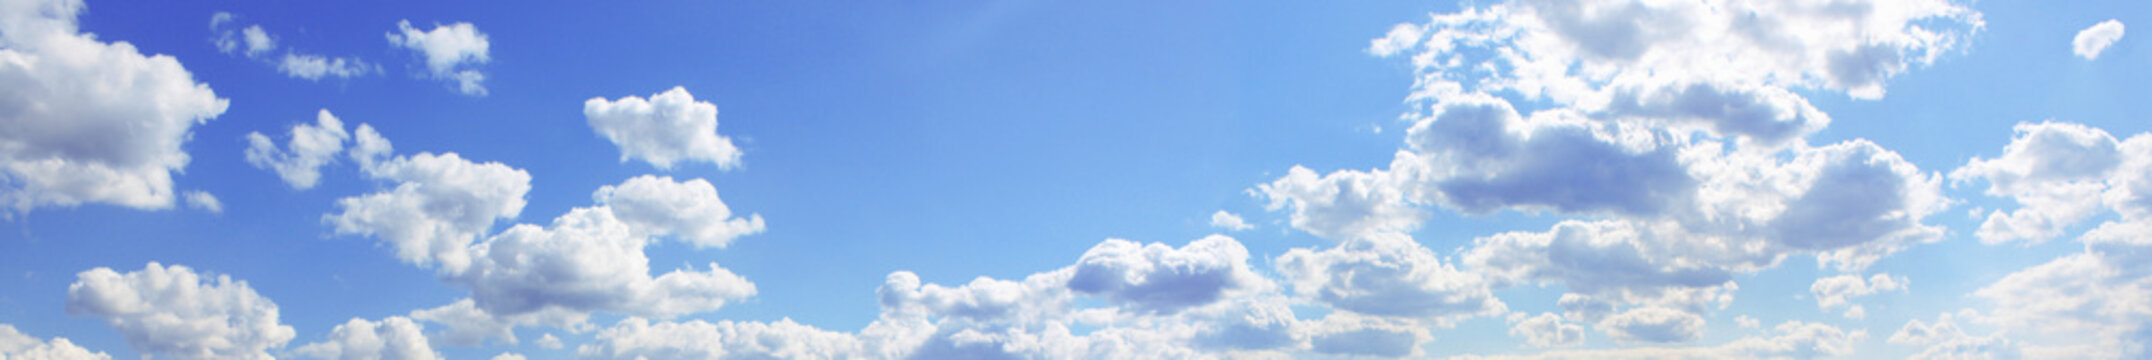 Blue cloudy sky